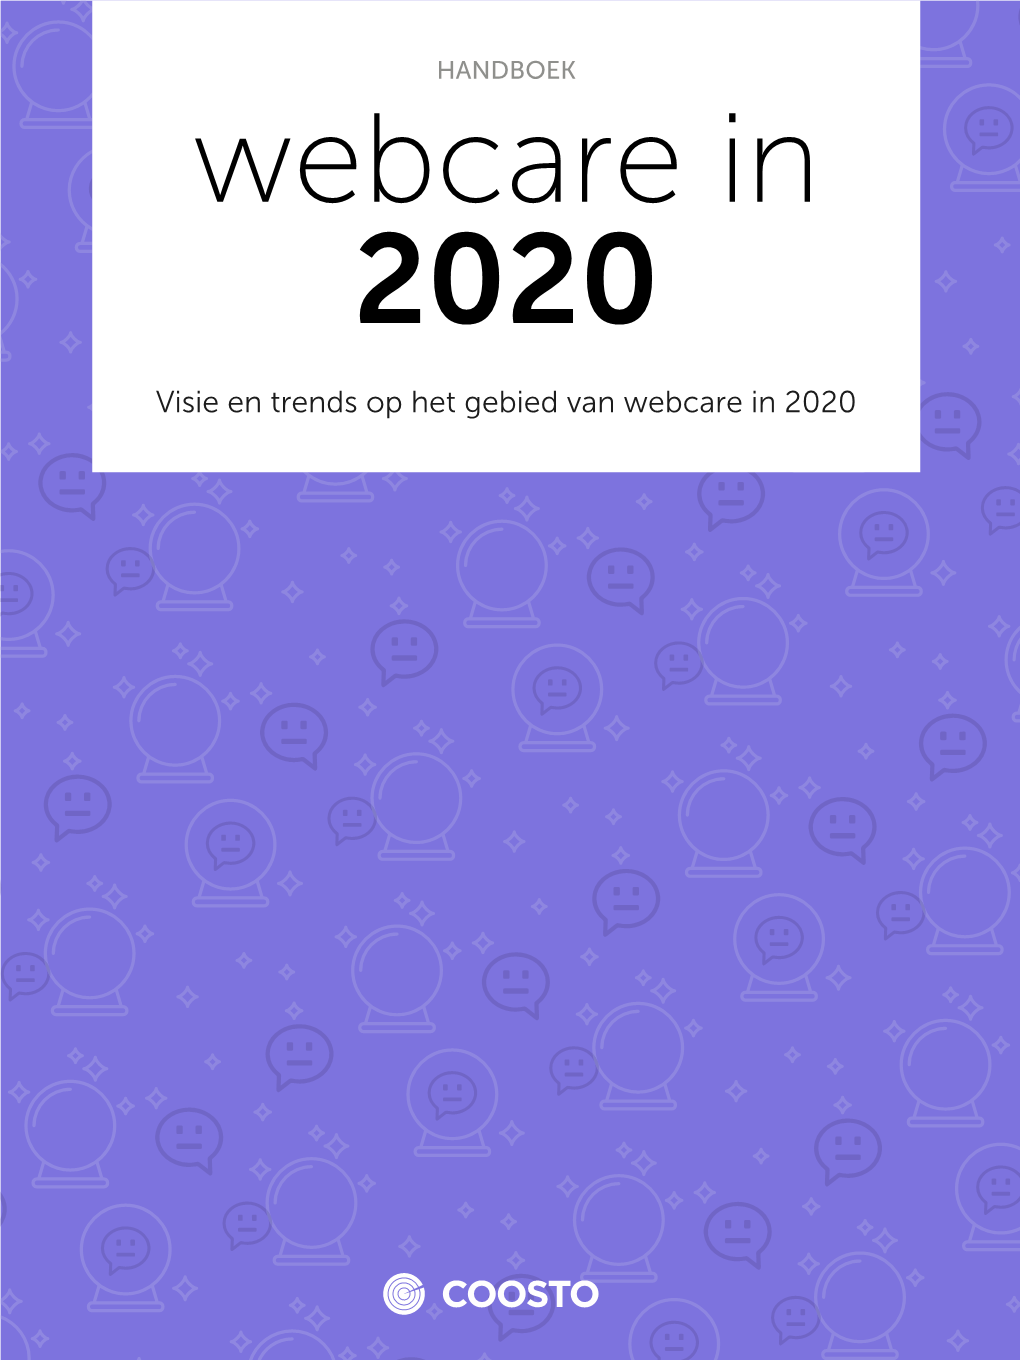 Visie En Trends Op Het Gebied Van Webcare in 2020 Webcare in 2020 - Visie En Trends Op Webcare-Gebied Richting 2020